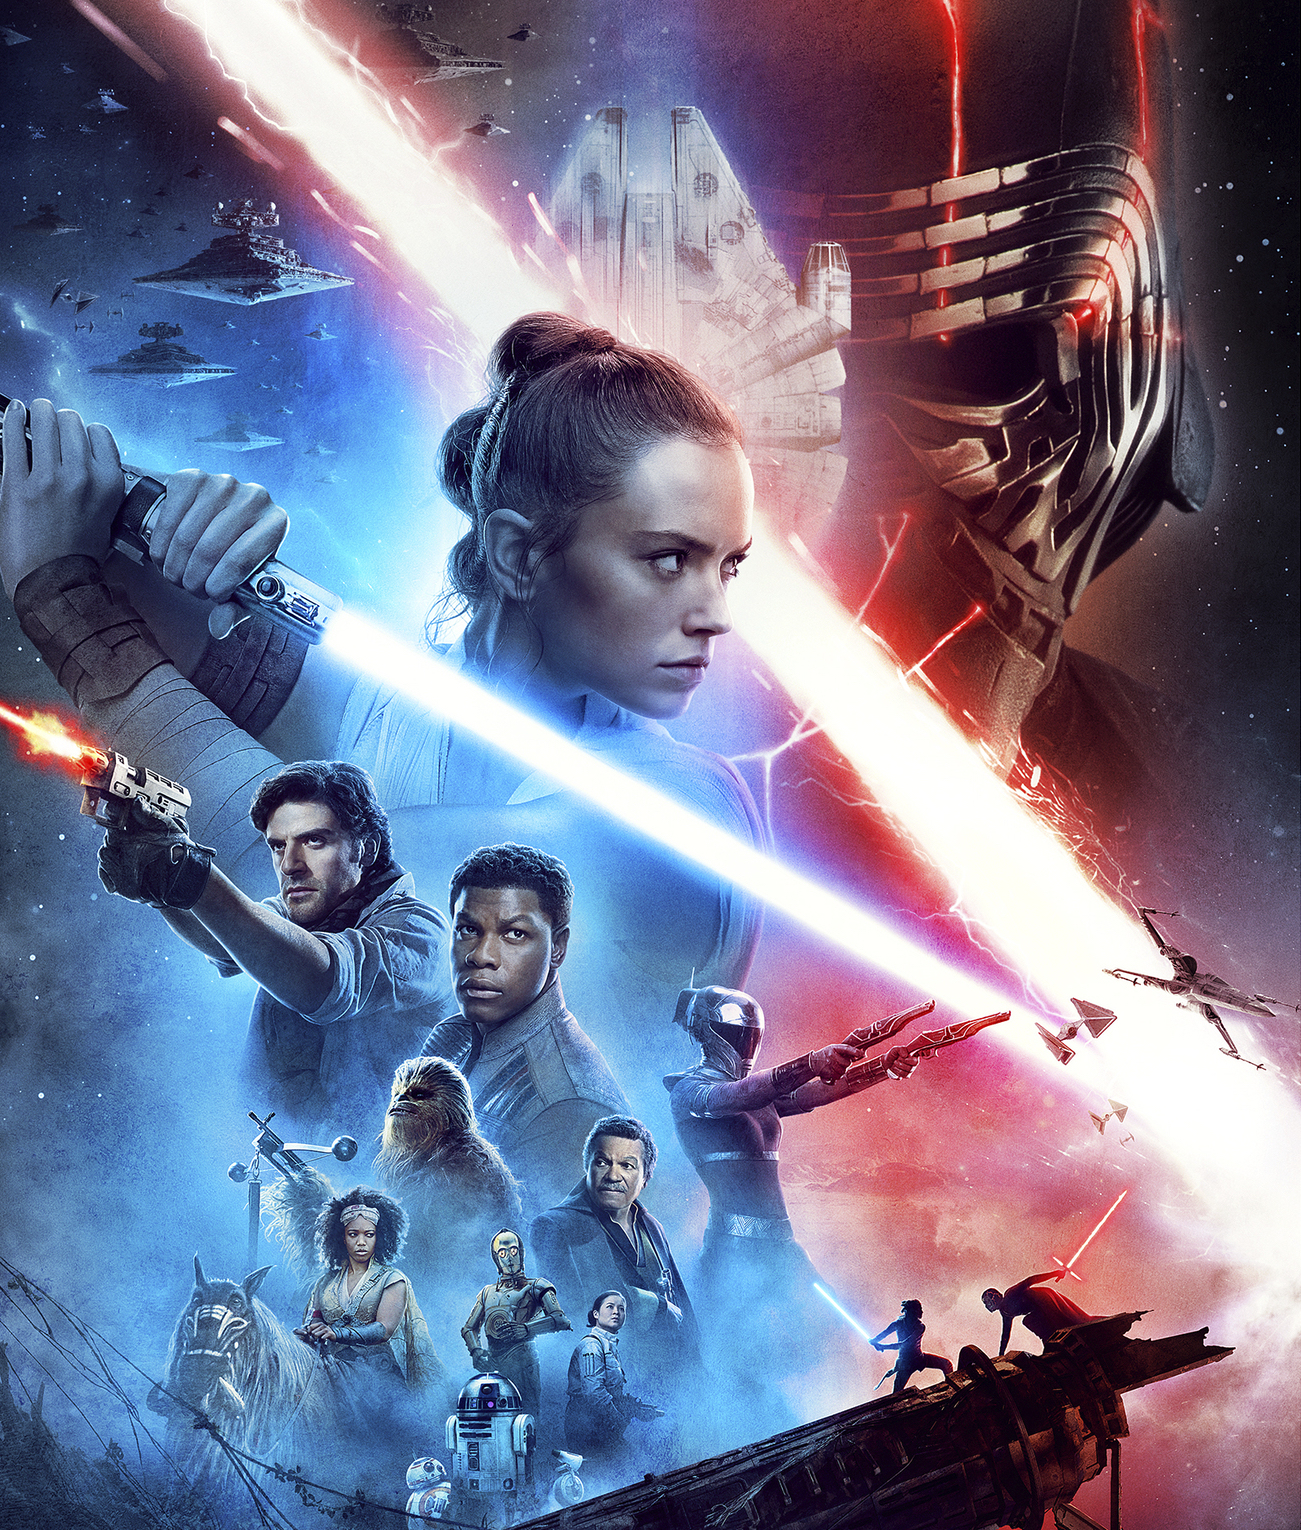 Vea el espectacular trailer final de “Star Wars: The Rise of Skywalker” (Video)